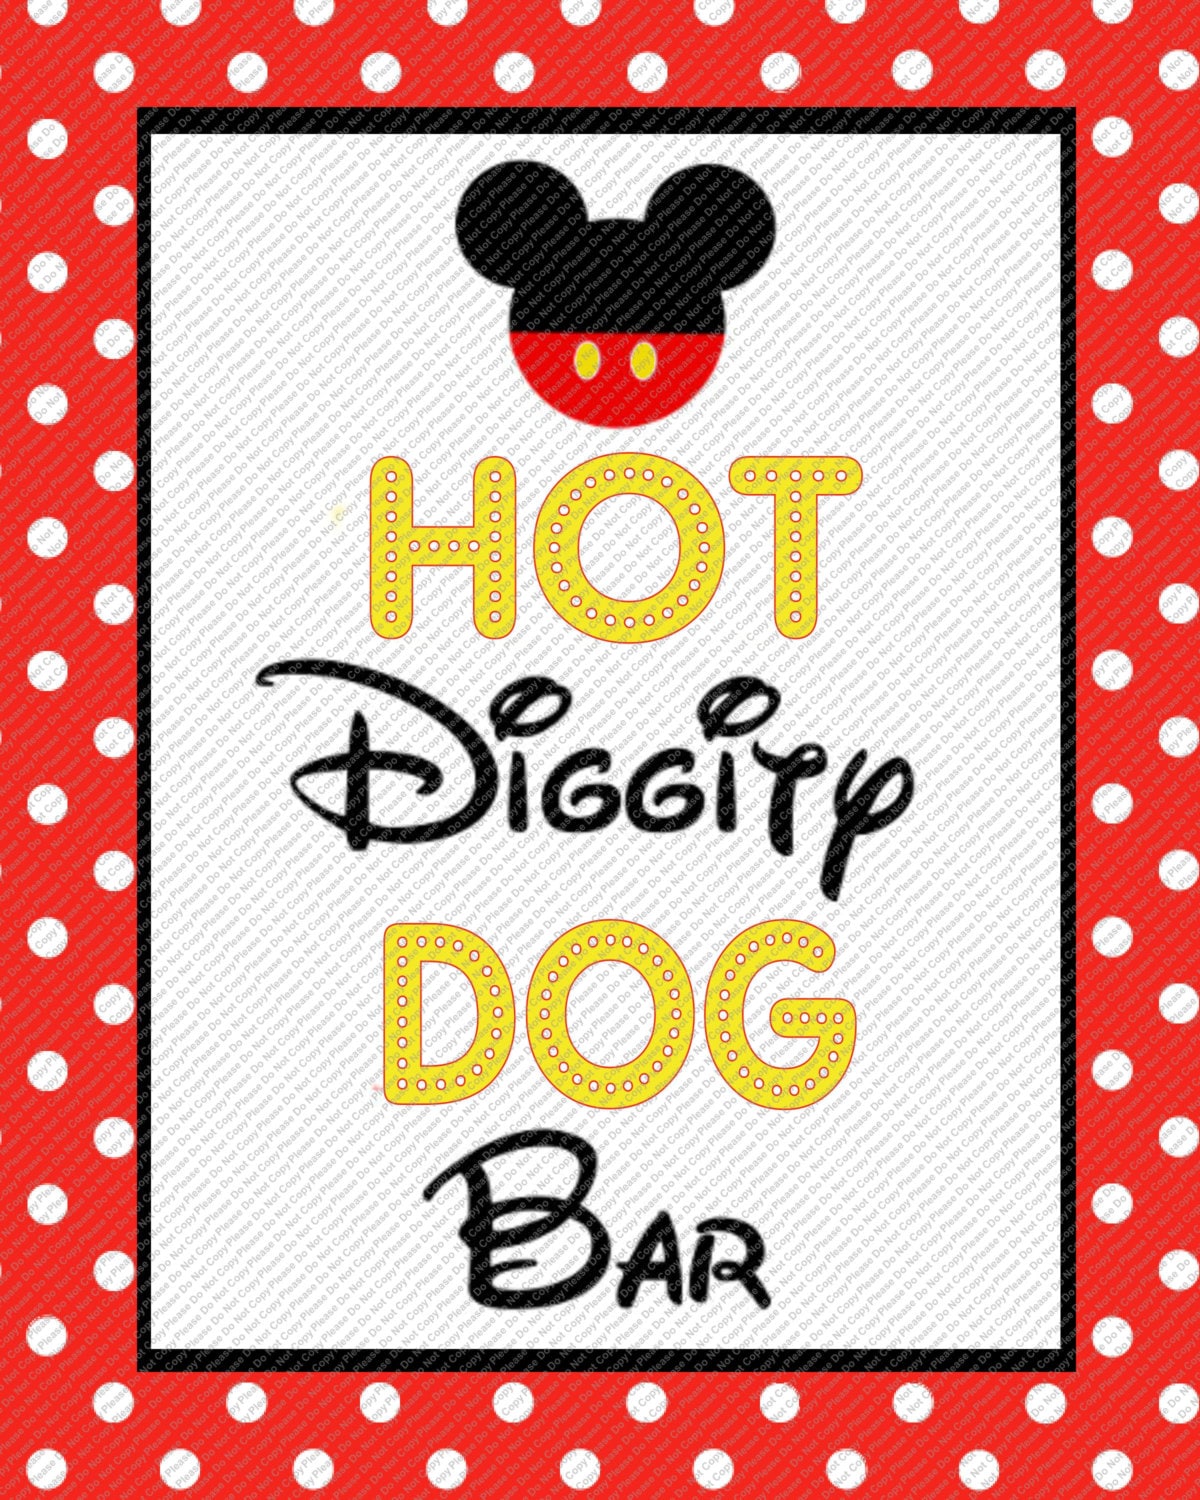 Hot Diggity Dog Bar Mickey Mouse Red Dot Border by DigitalDiva007